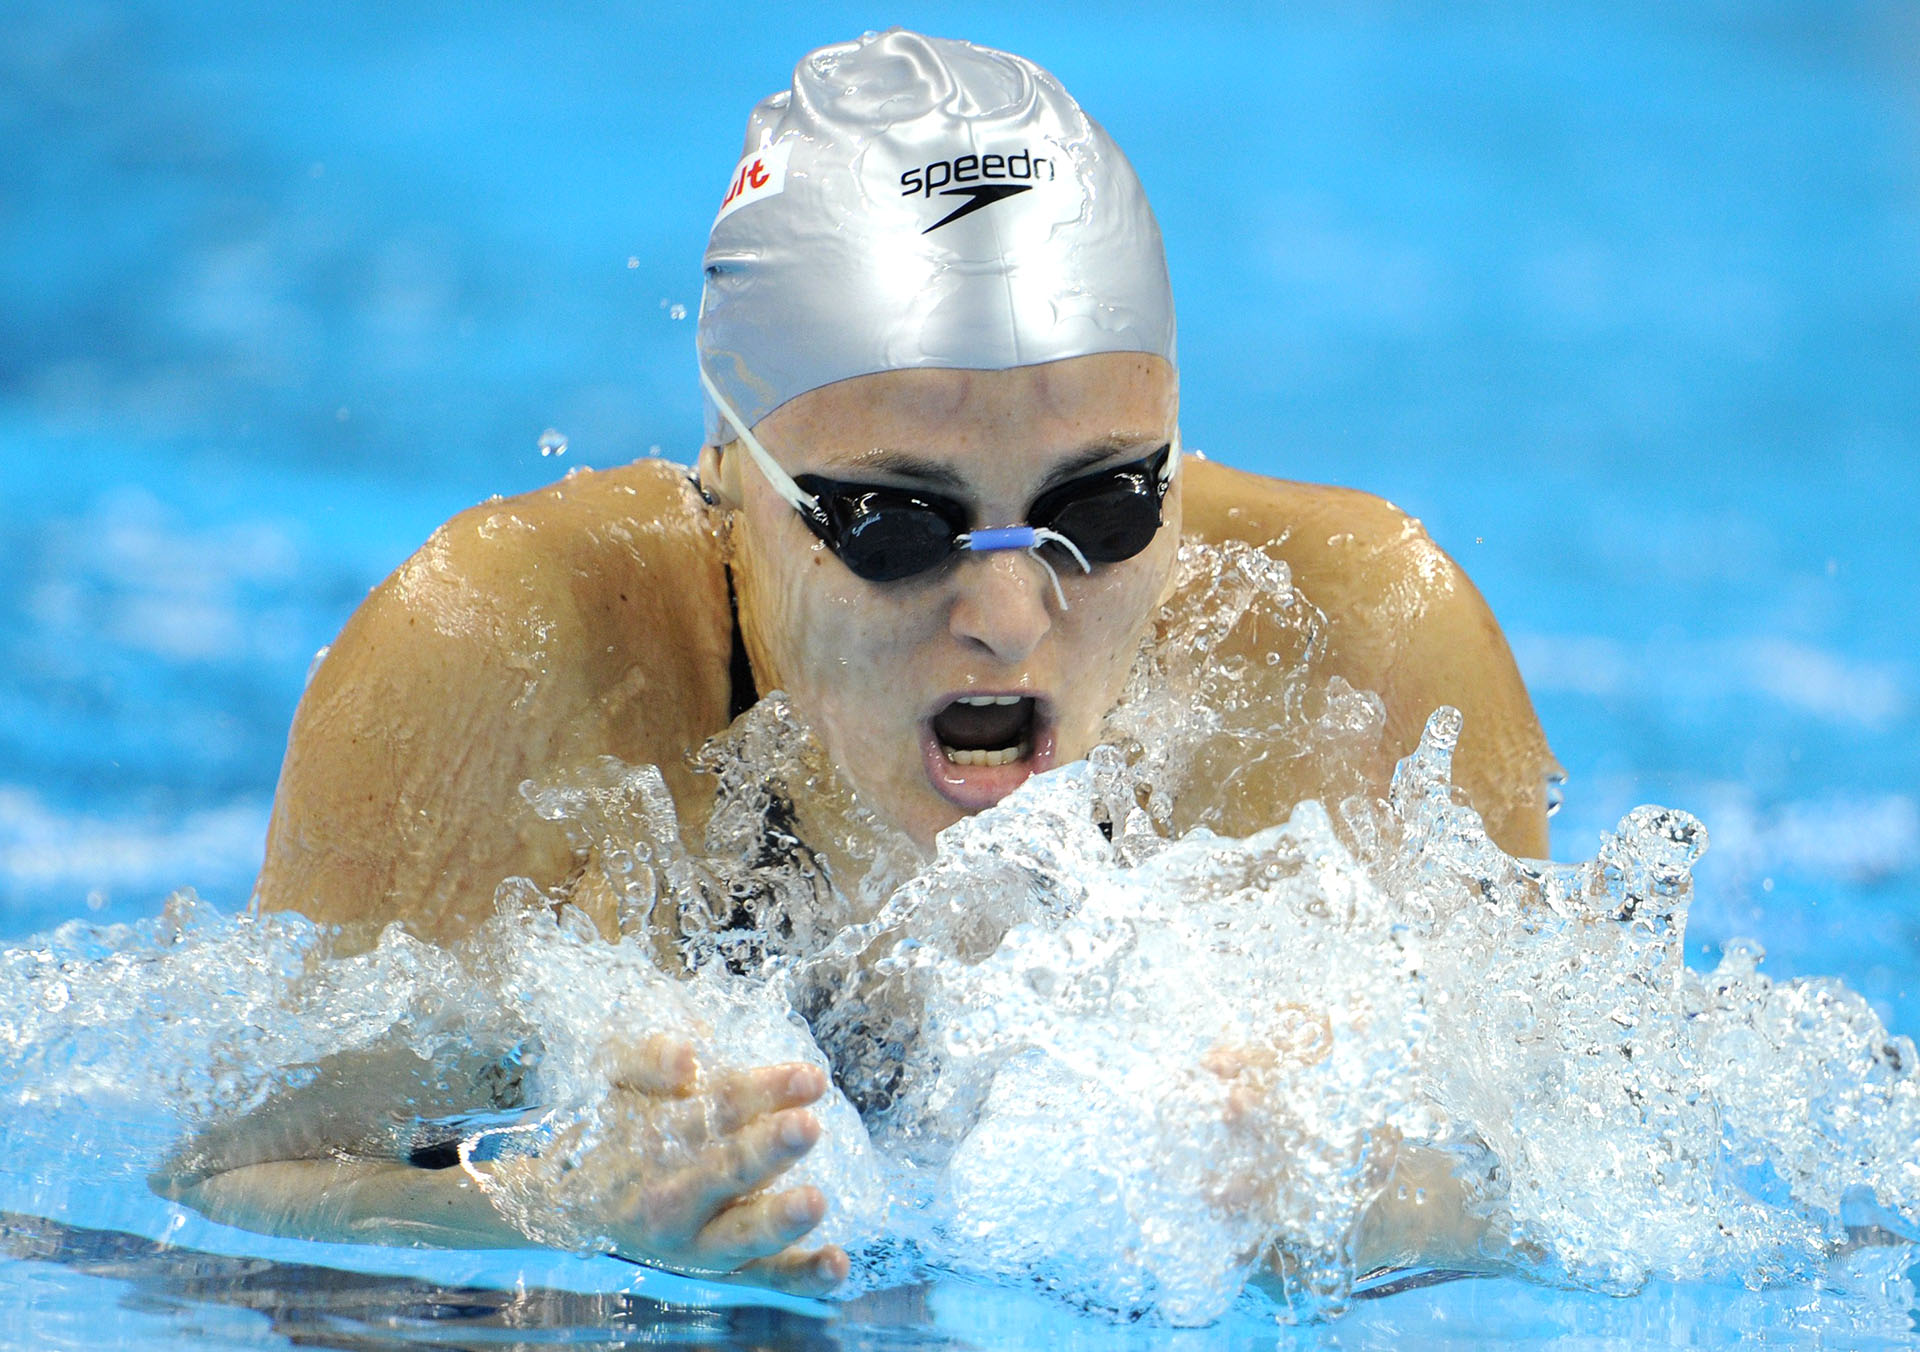 Melbourne will host FINA World Swimming Championships (25m)